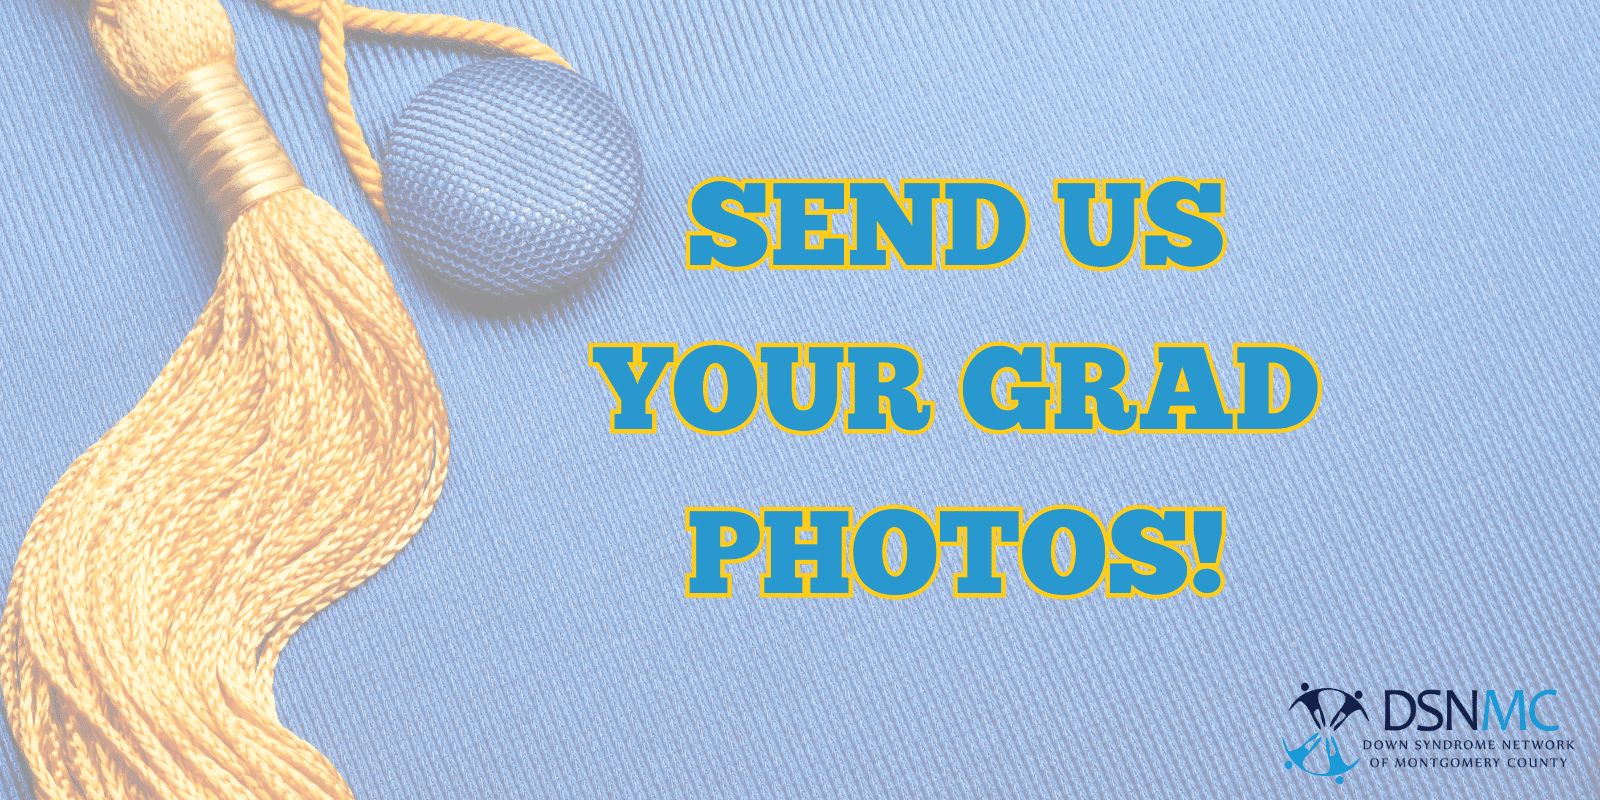 Call for grad photos!